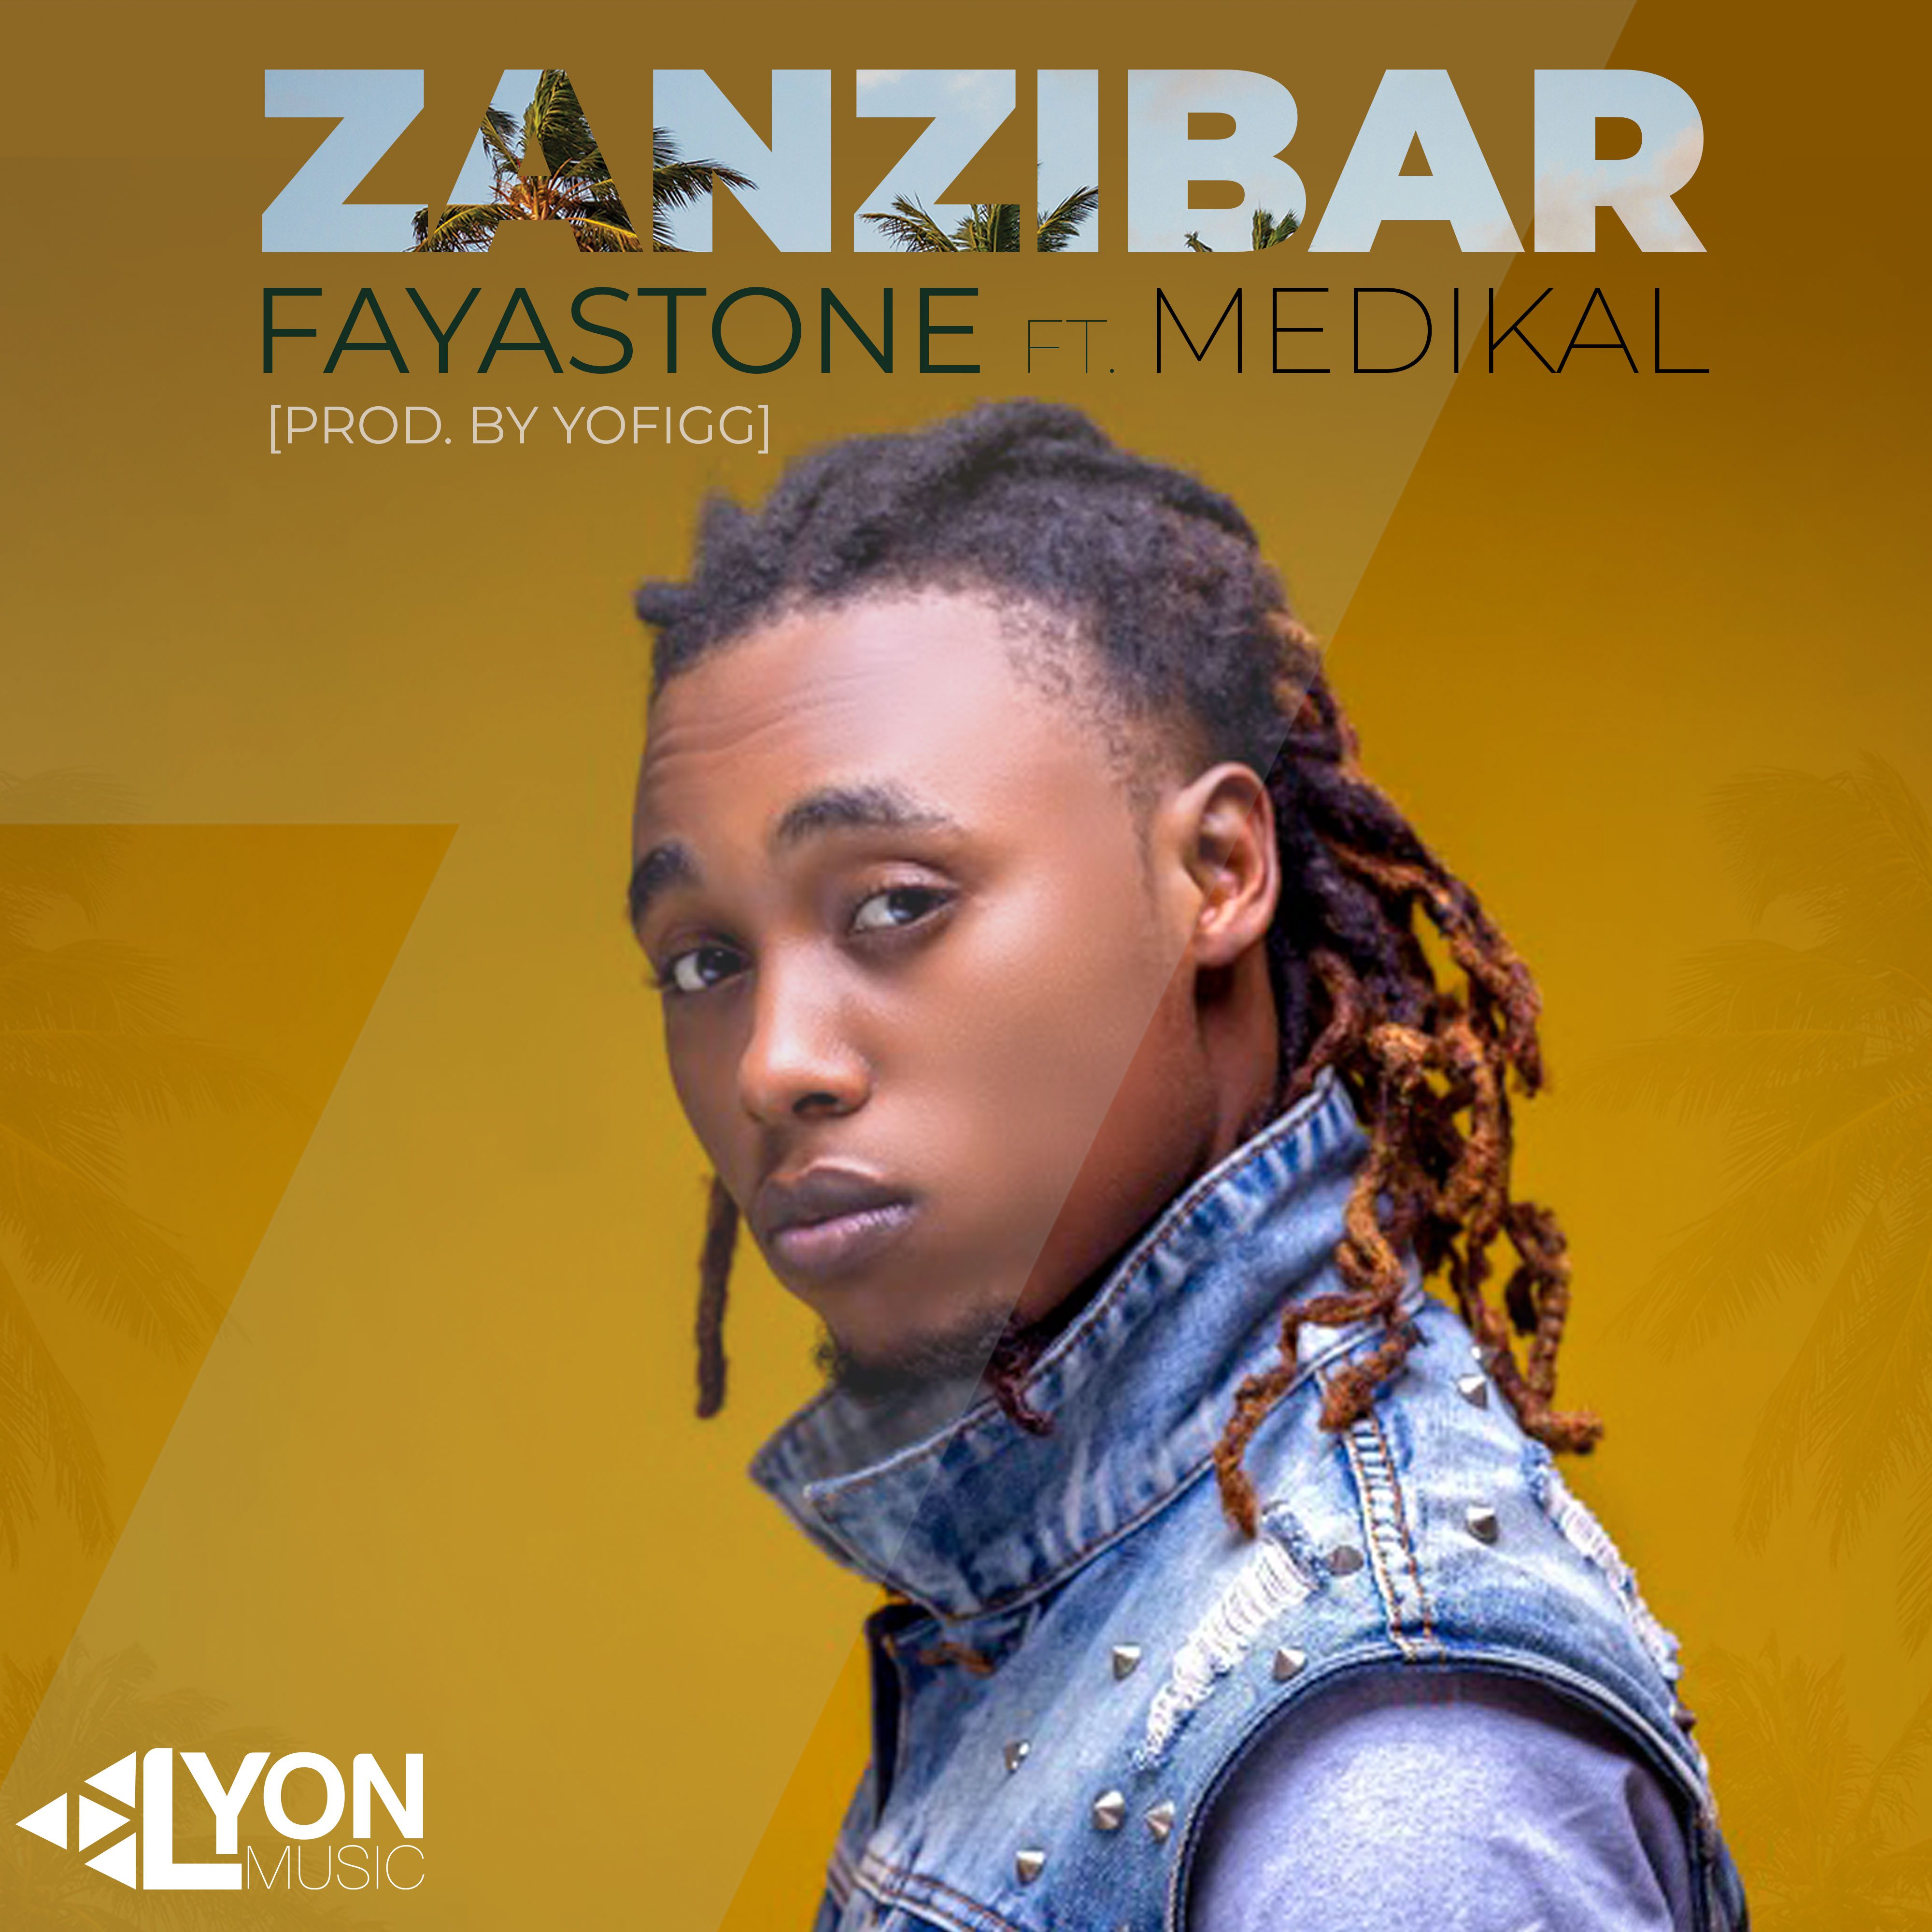 Audio/Video: Fayastone – Zanzibar ft Medikal (Prod. by YoFigg)